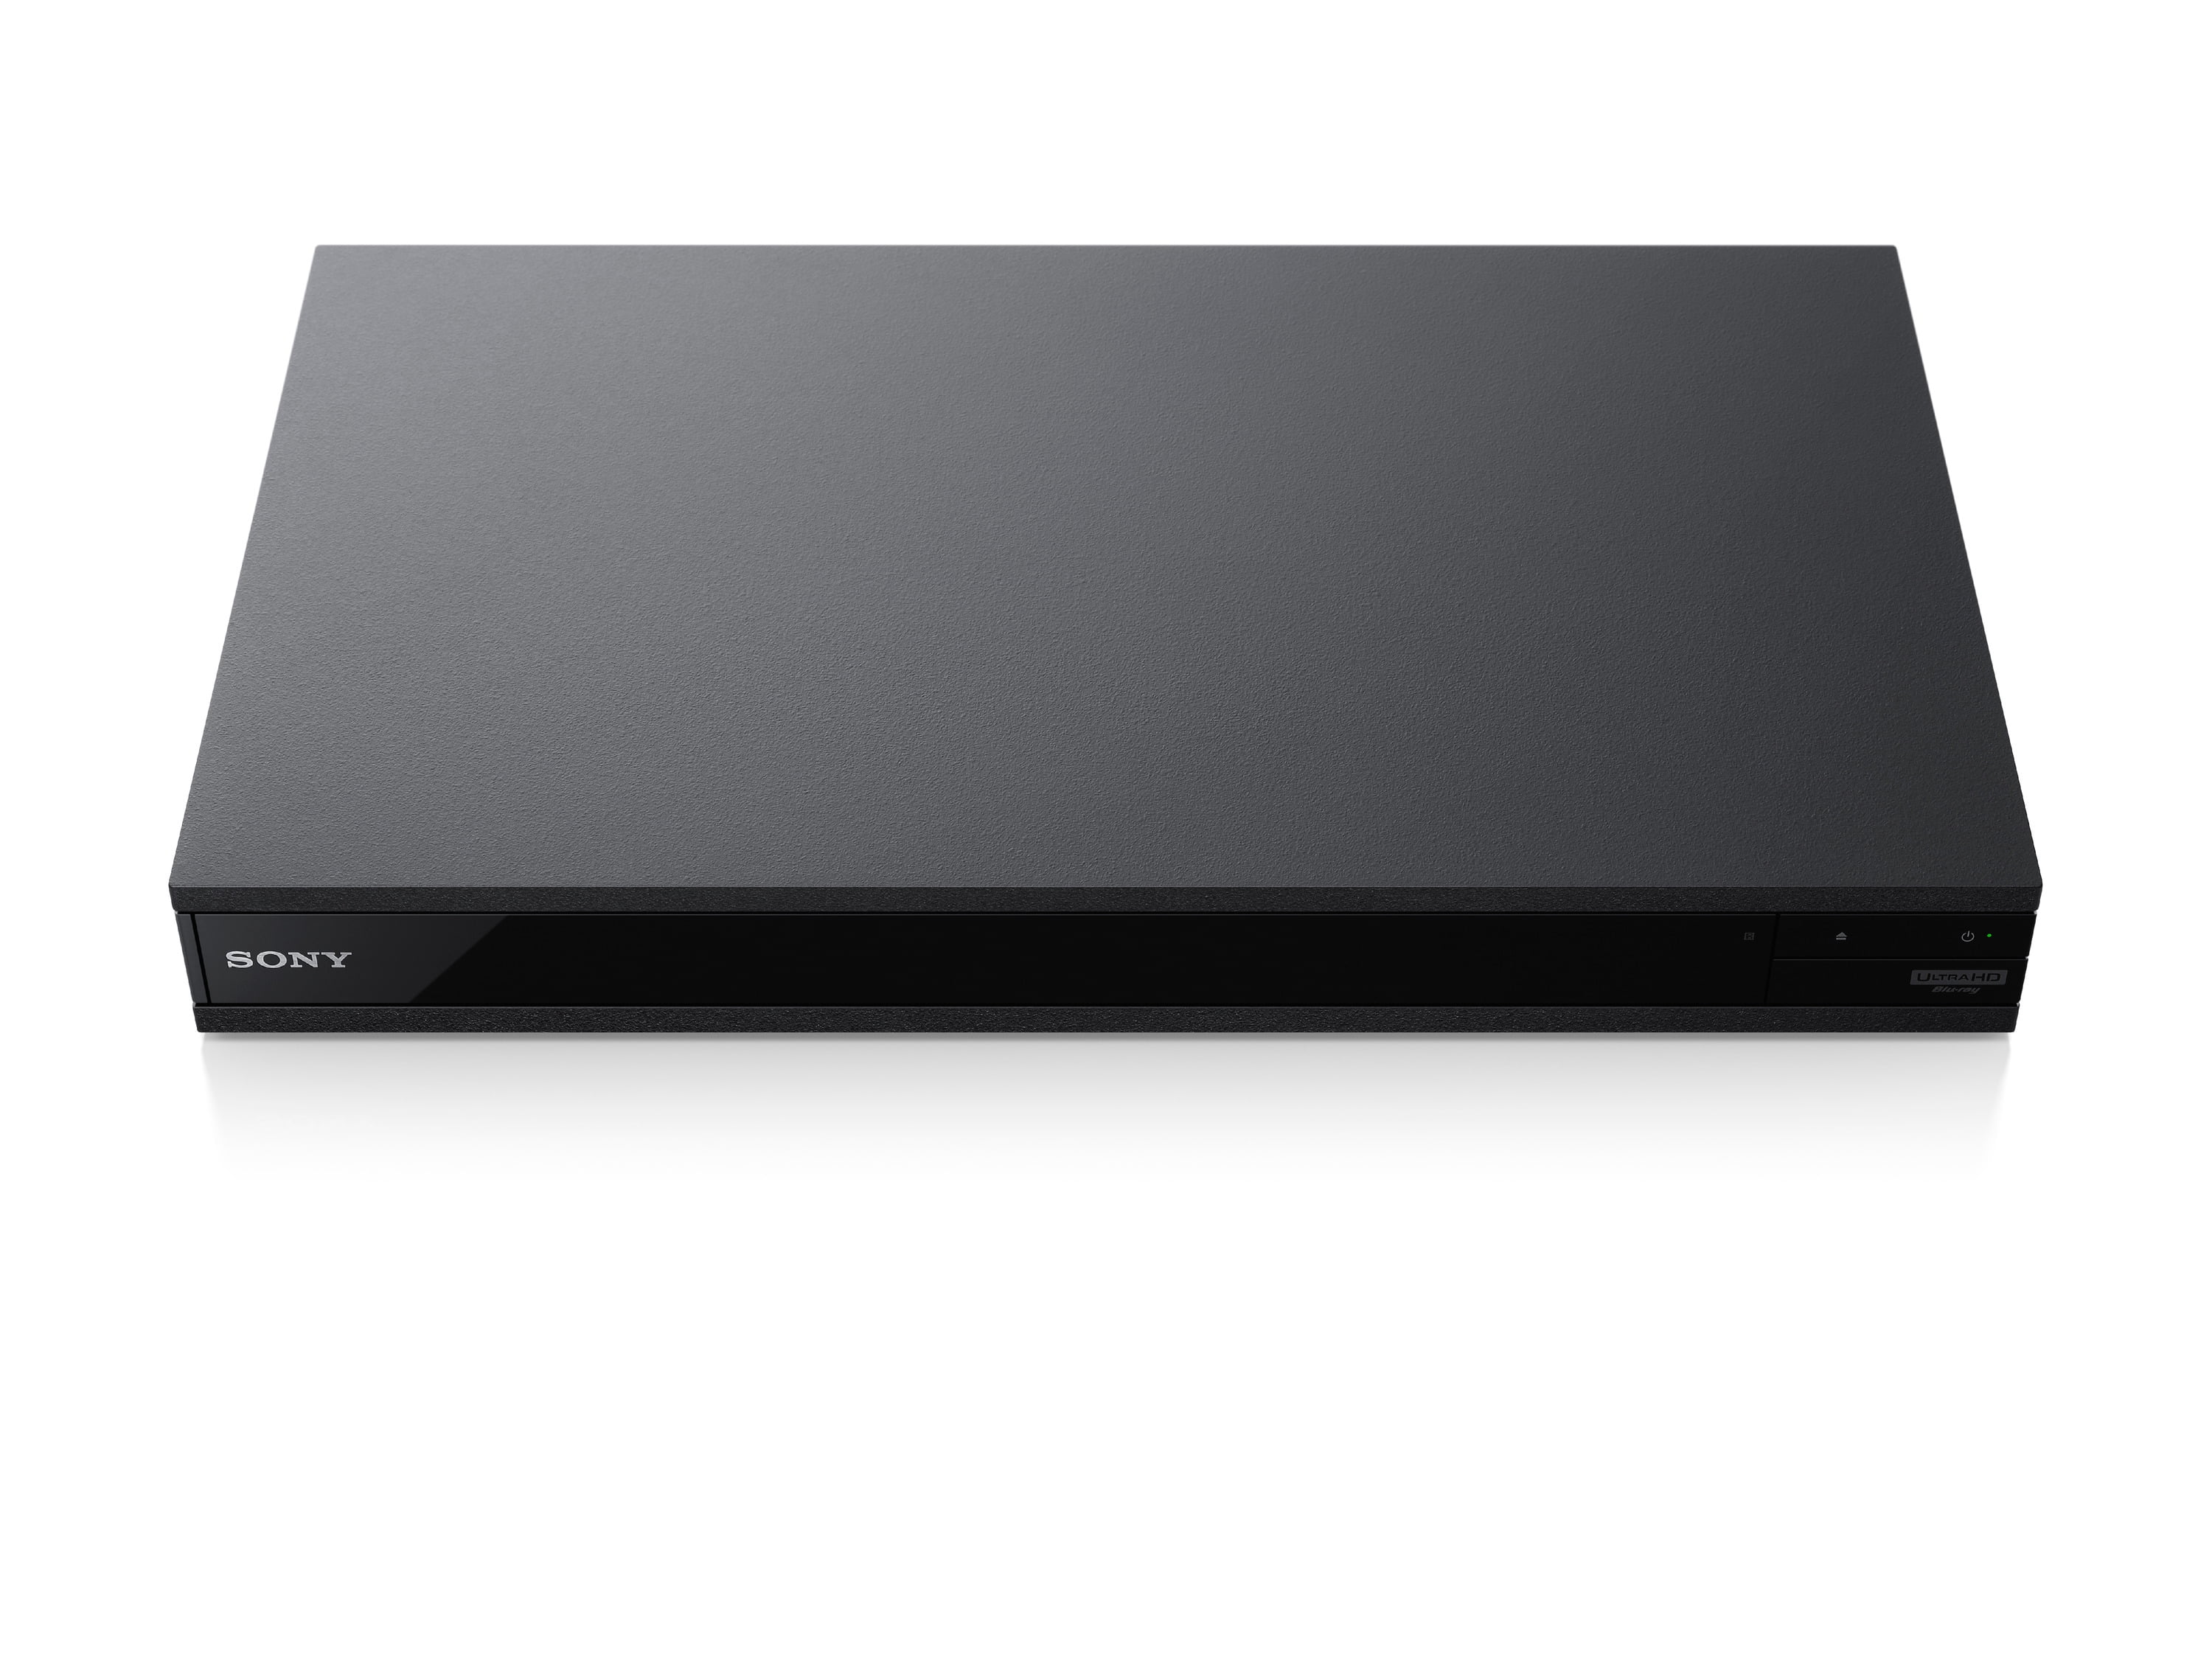 Sony UBP-X800M2 4K Ultra HD Home Theater Streaming Blu-Ray Player 